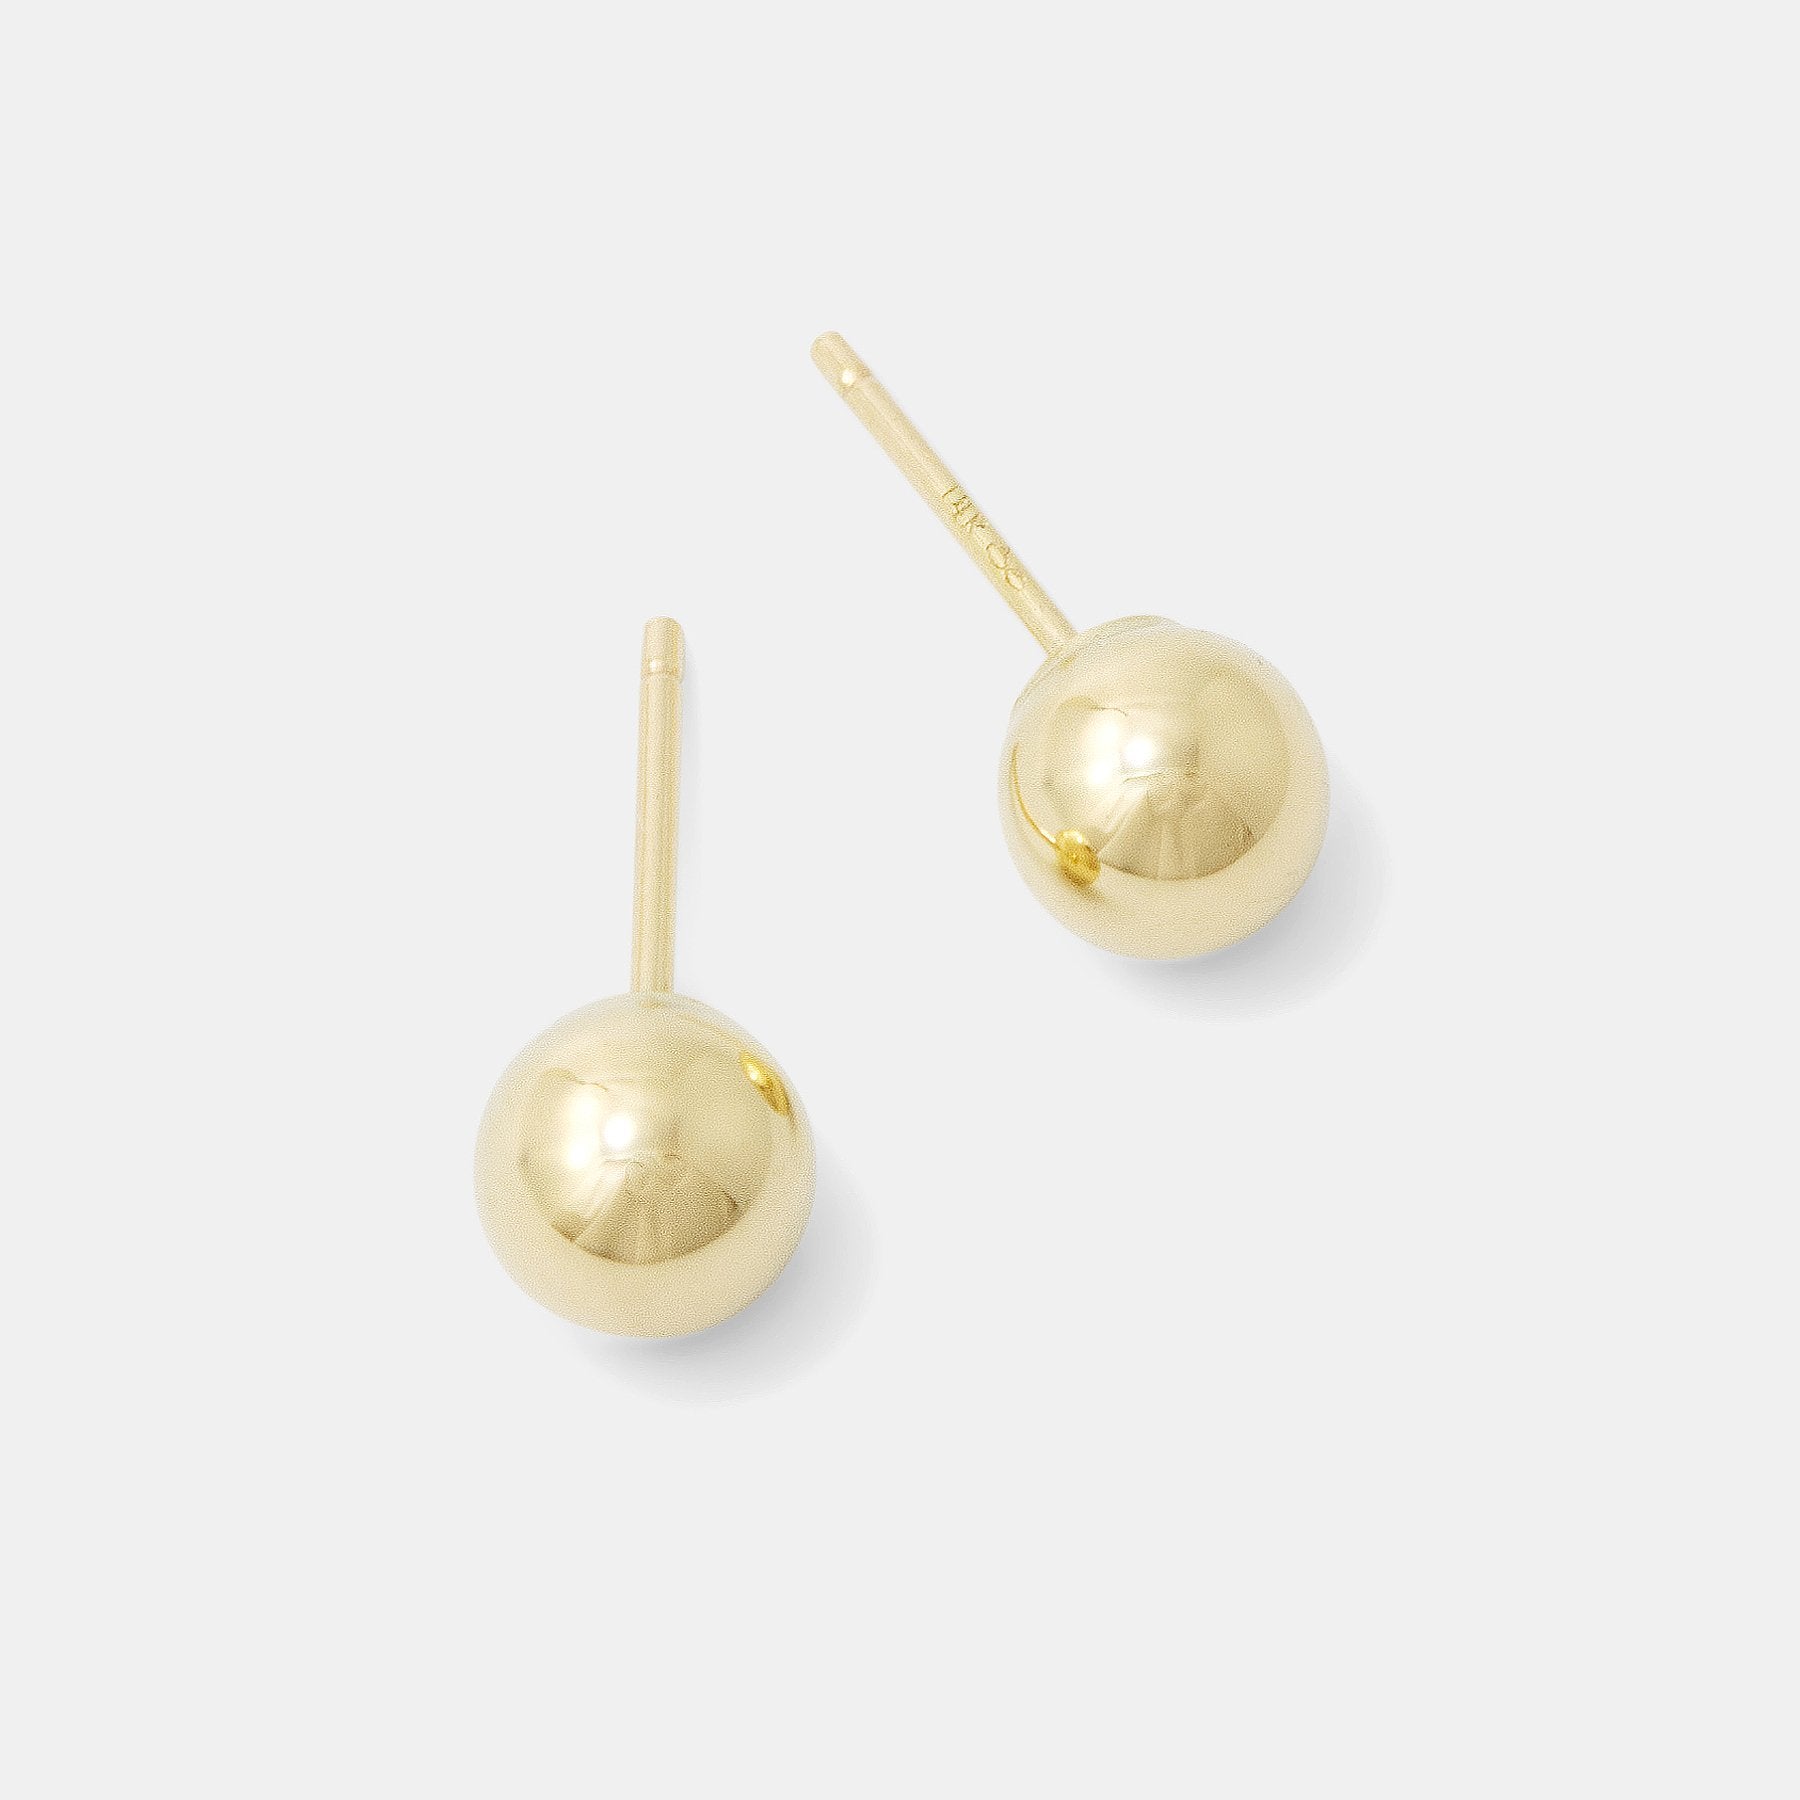 Ball stud large earrings: gold - Simone Walsh Jewellery Australia